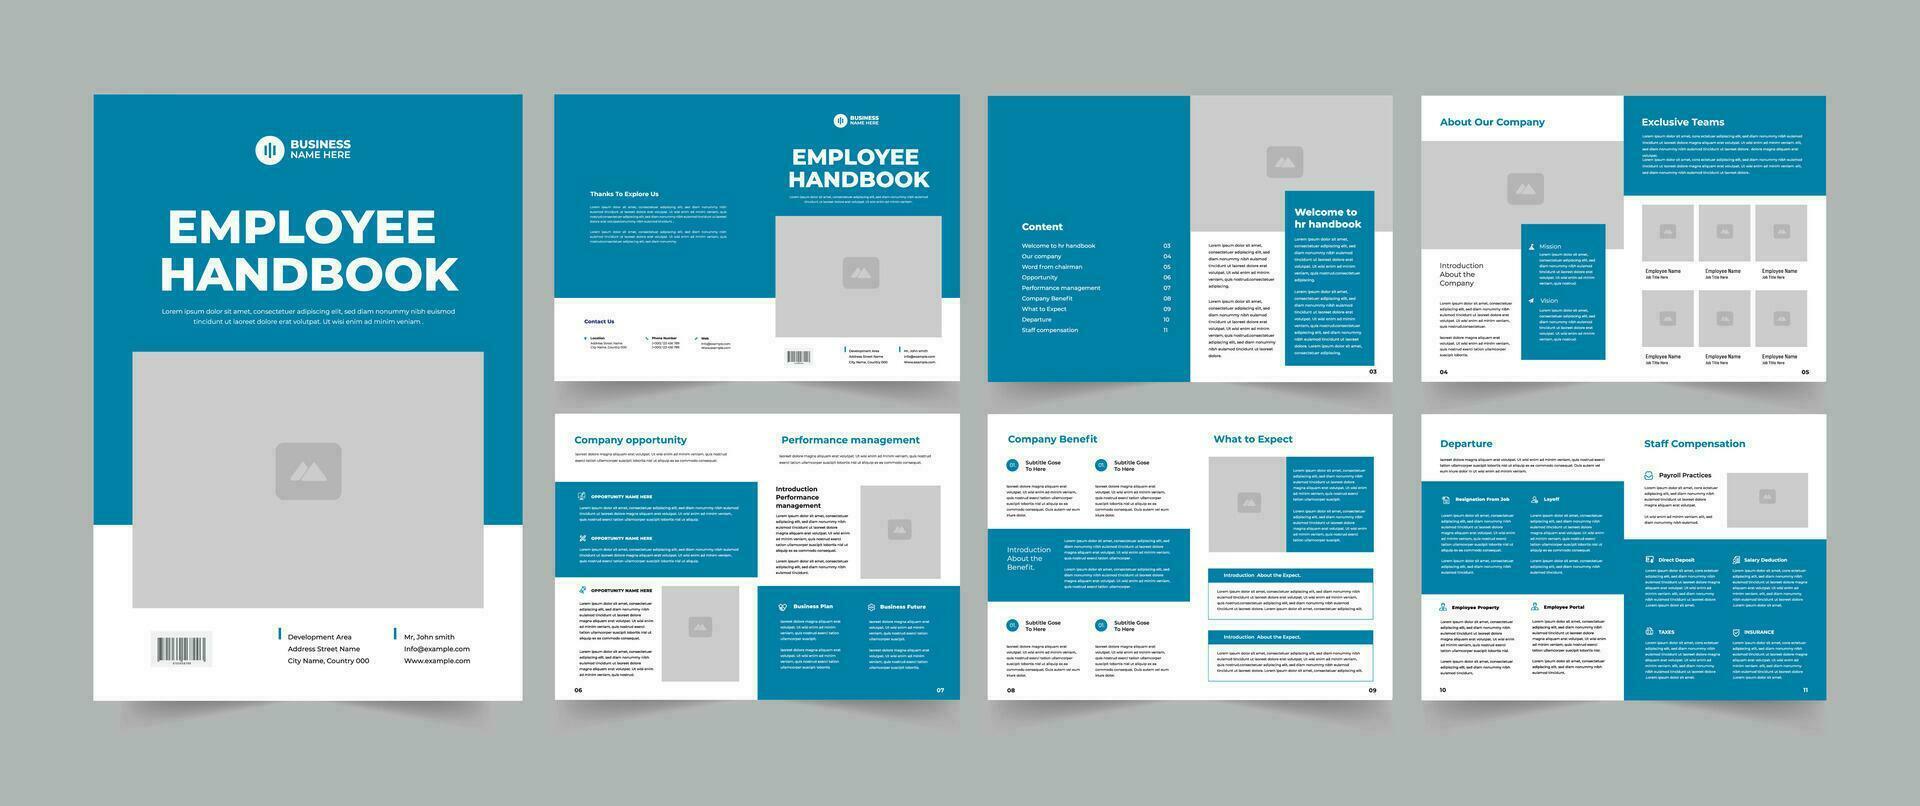 Employee Handbook Hr Employee Handbook Layout Design vector